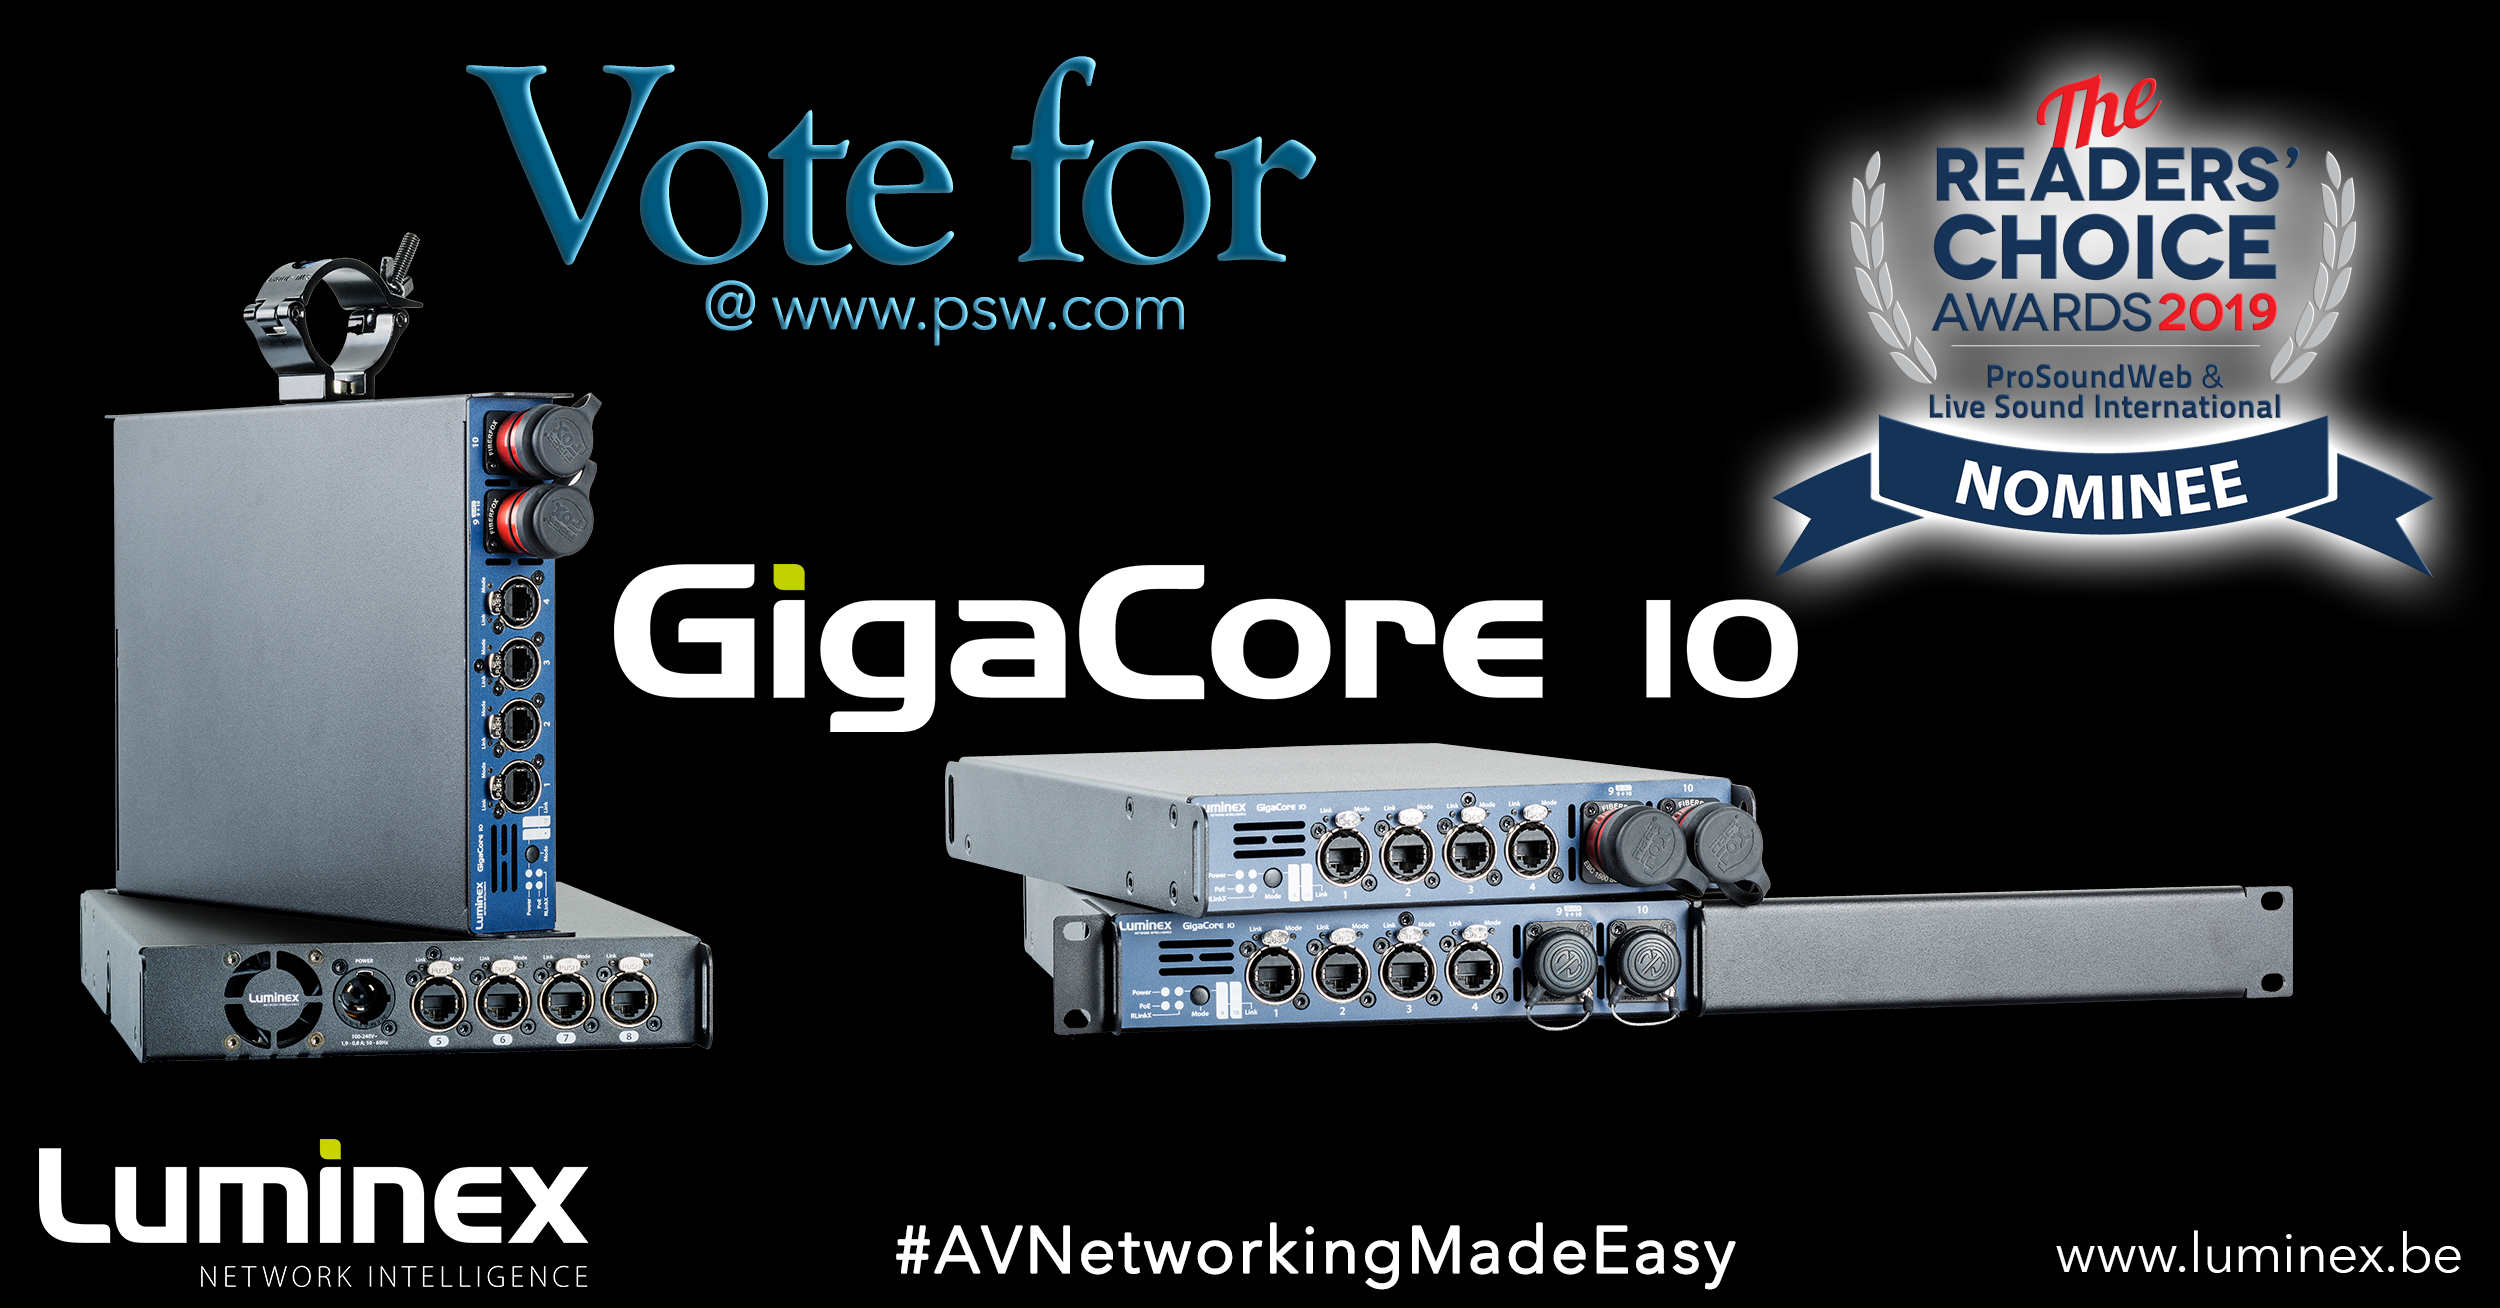 Luminex GigaCore 10 Network Switch nominated for a ProSoundWeb